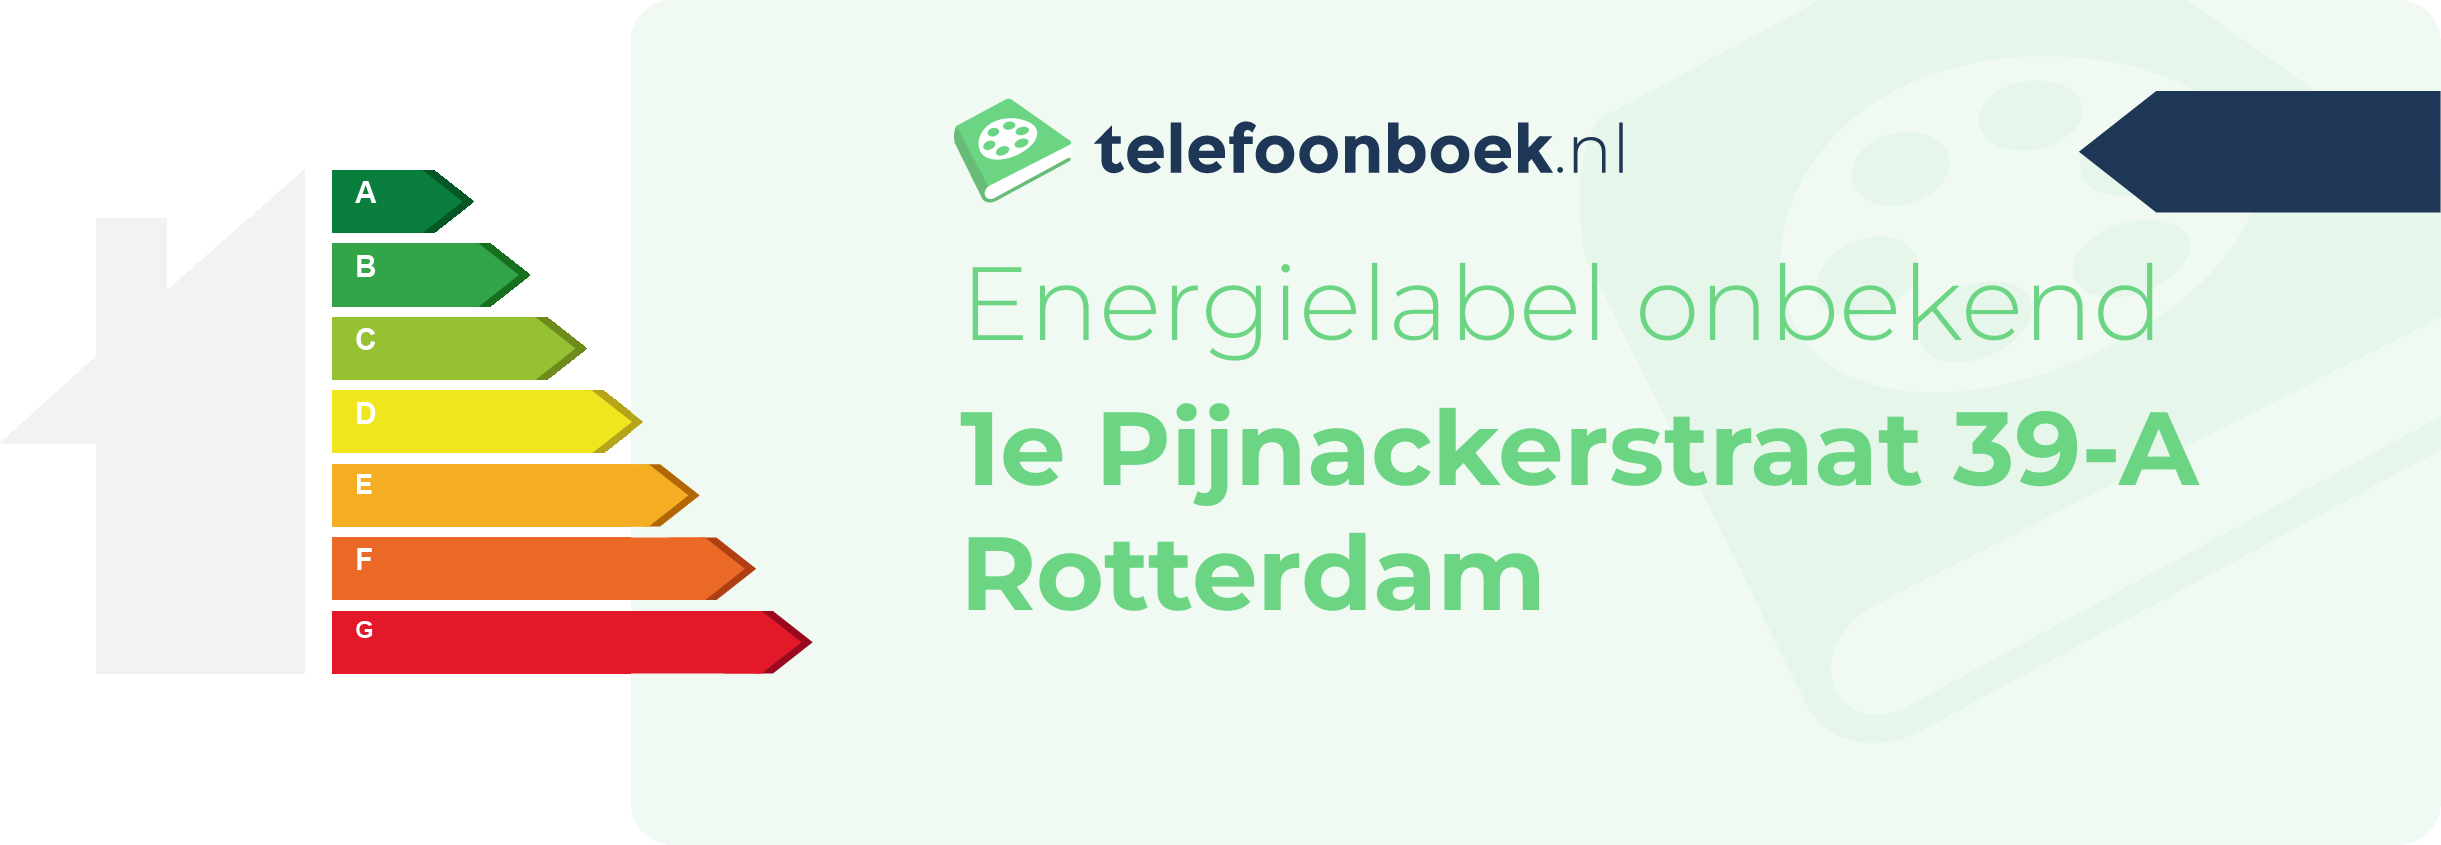 Energielabel 1e Pijnackerstraat 39-A Rotterdam